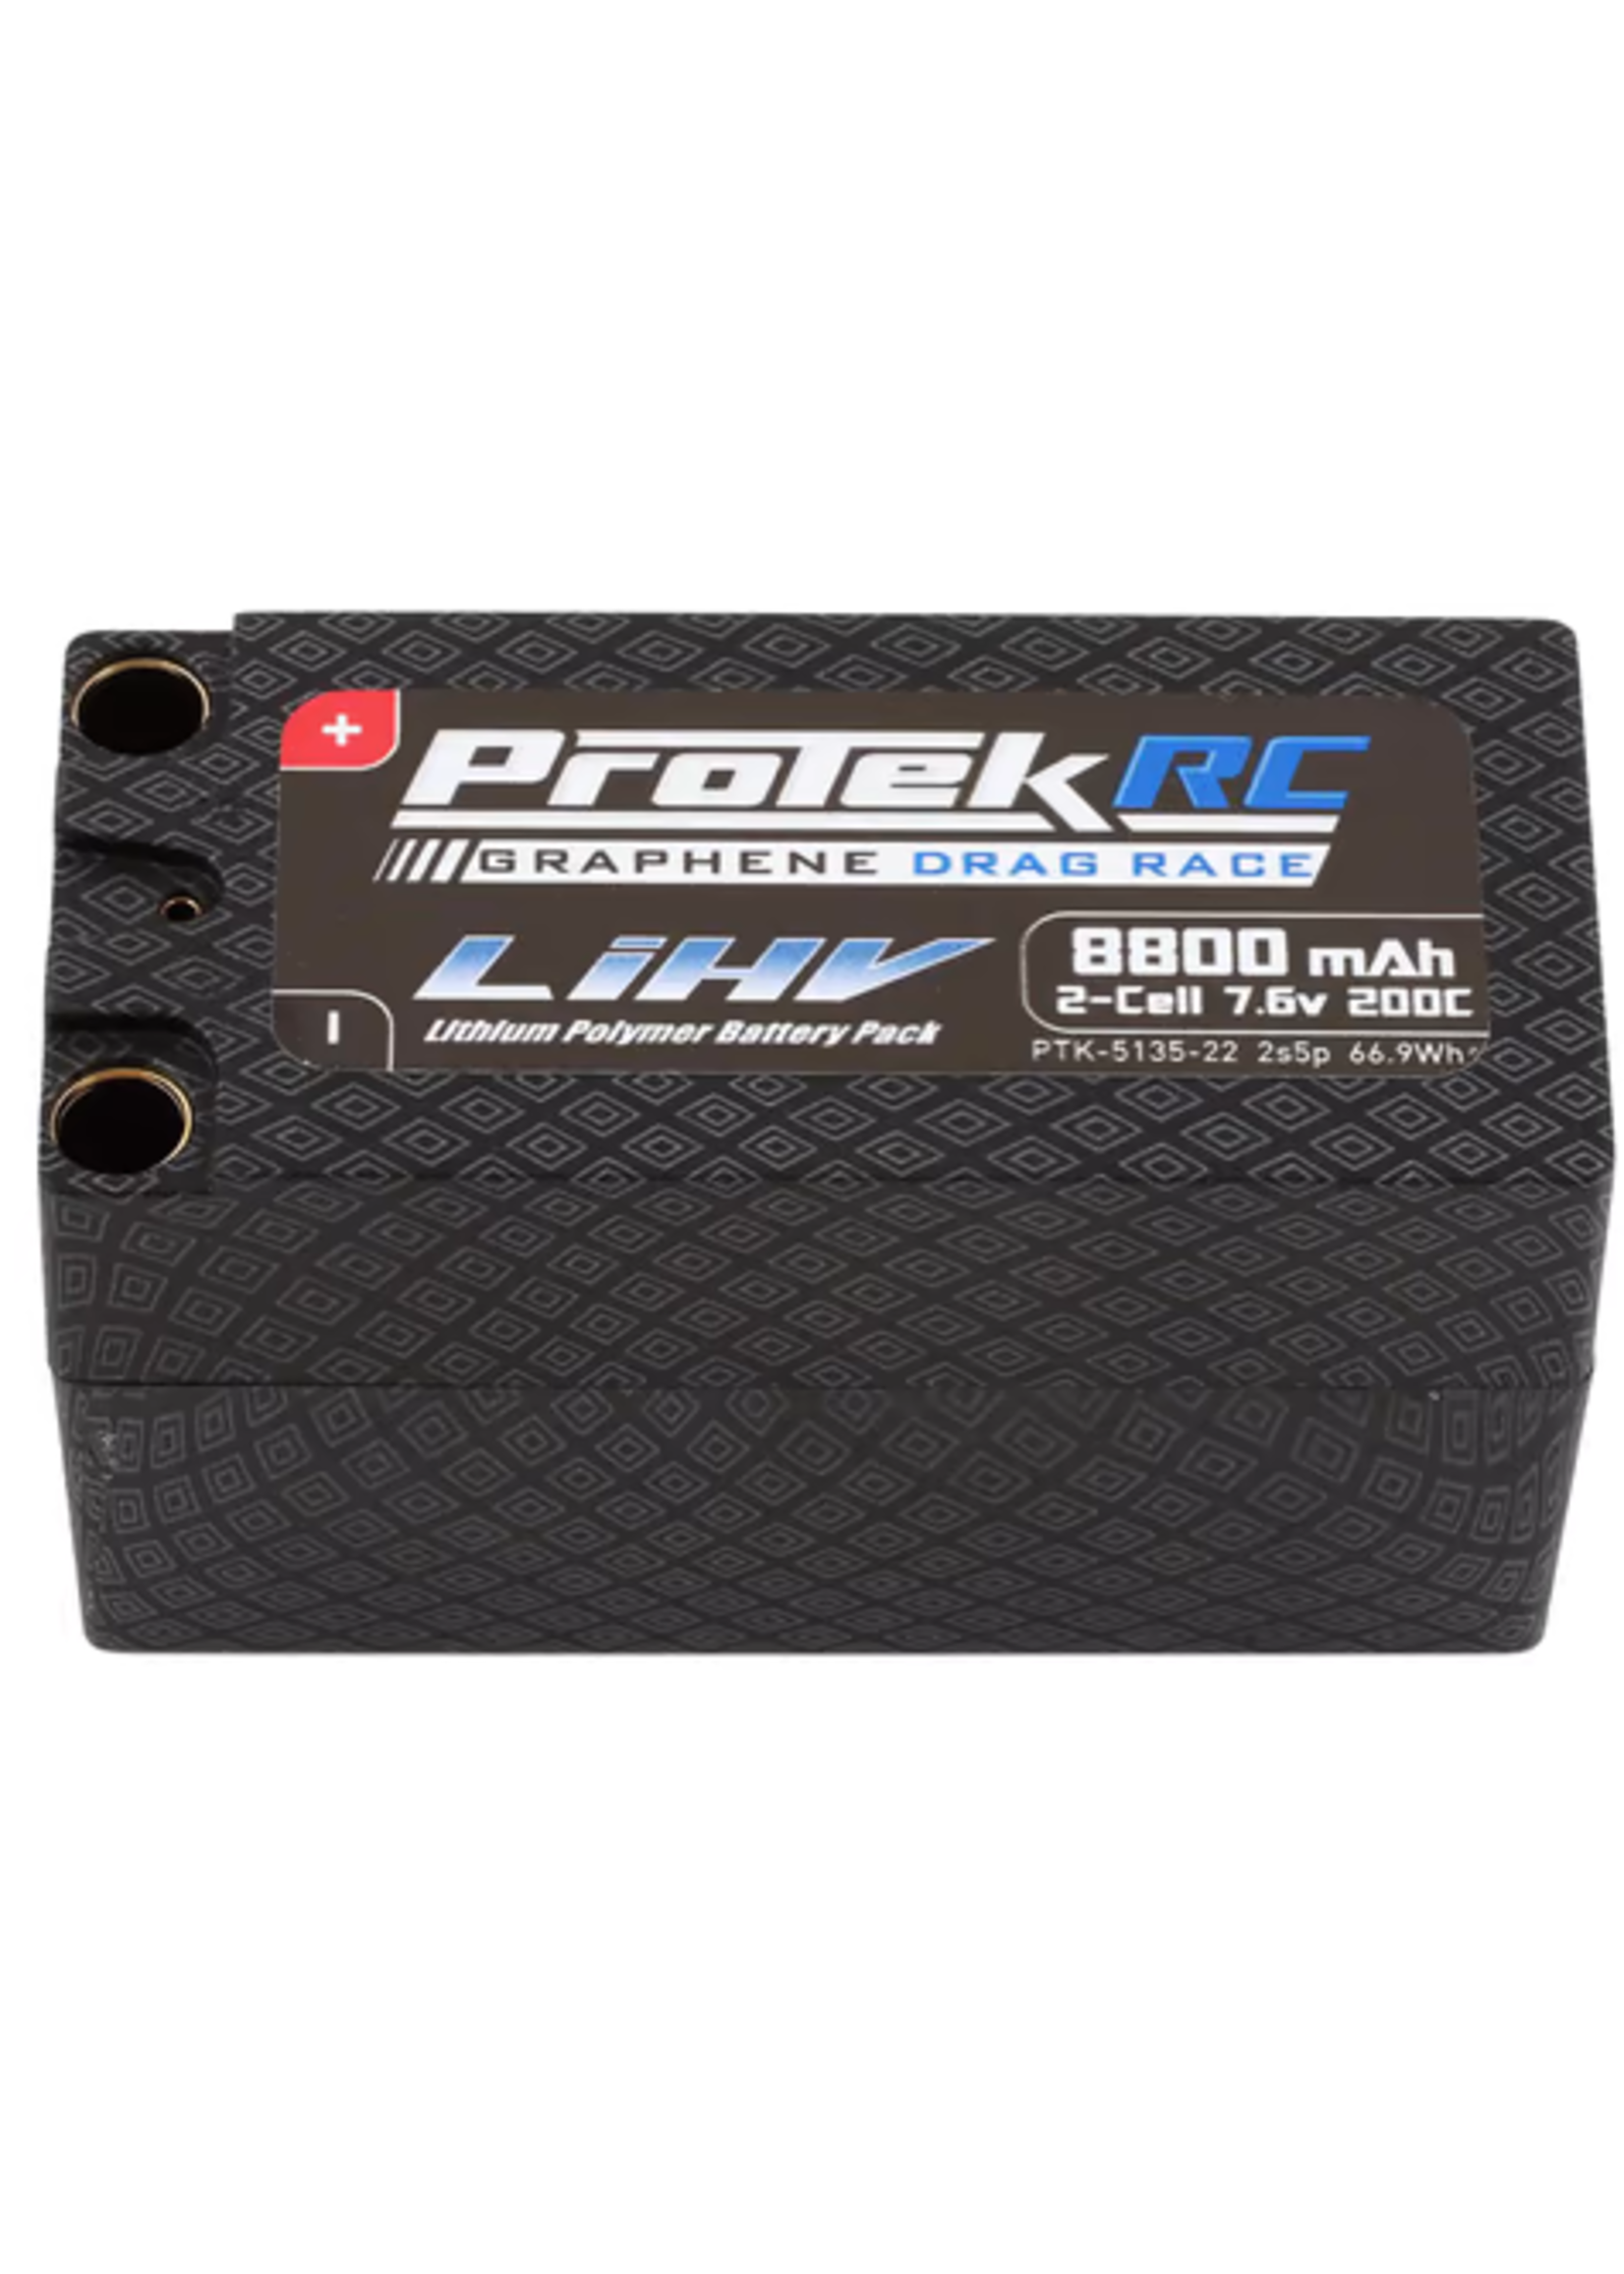 PTK-5135-22 ProTek RC 2S 200C 2s5p Si-Graphene Drag Race Shorty LiPo  Battery (7.6V/8800mAh) w/8mm Connectors - Fast Eddie's RC Hobbies